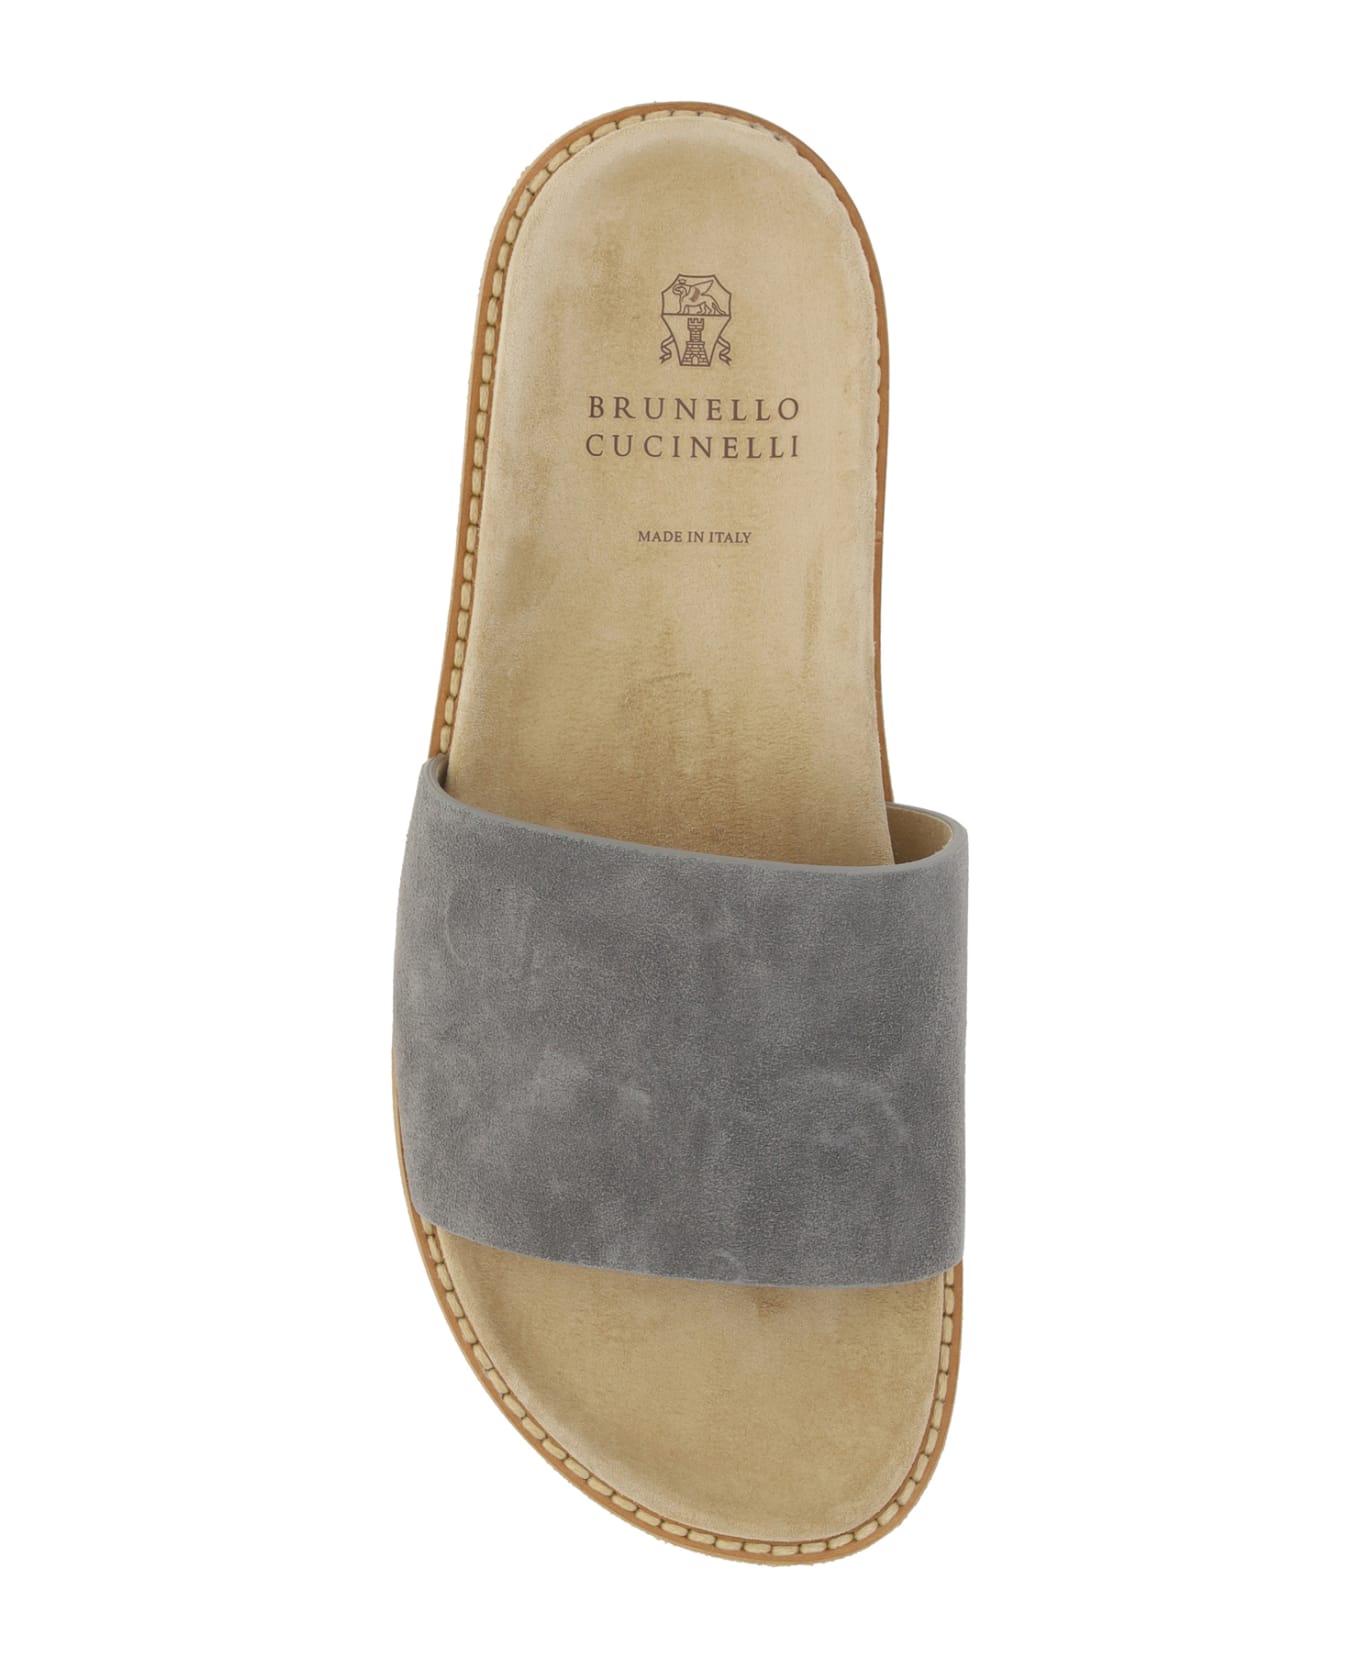 Brunello Cucinelli Sandals - Fumo+camel その他各種シューズ